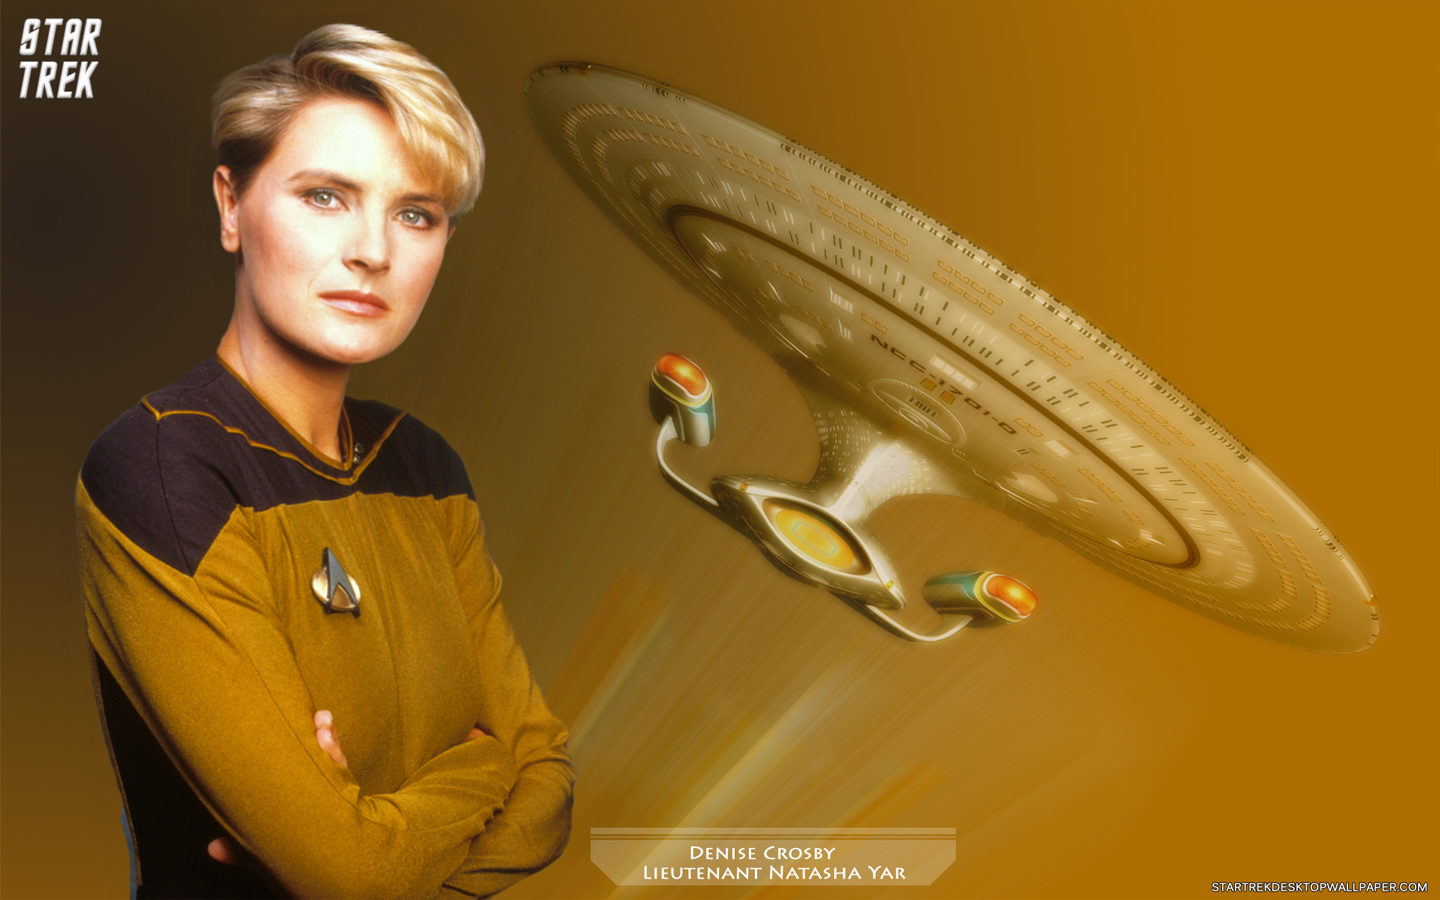 - Star Trek Lieutenant Natasha Yar - free Star Trek computer desktop wallpaper, pictures, images.